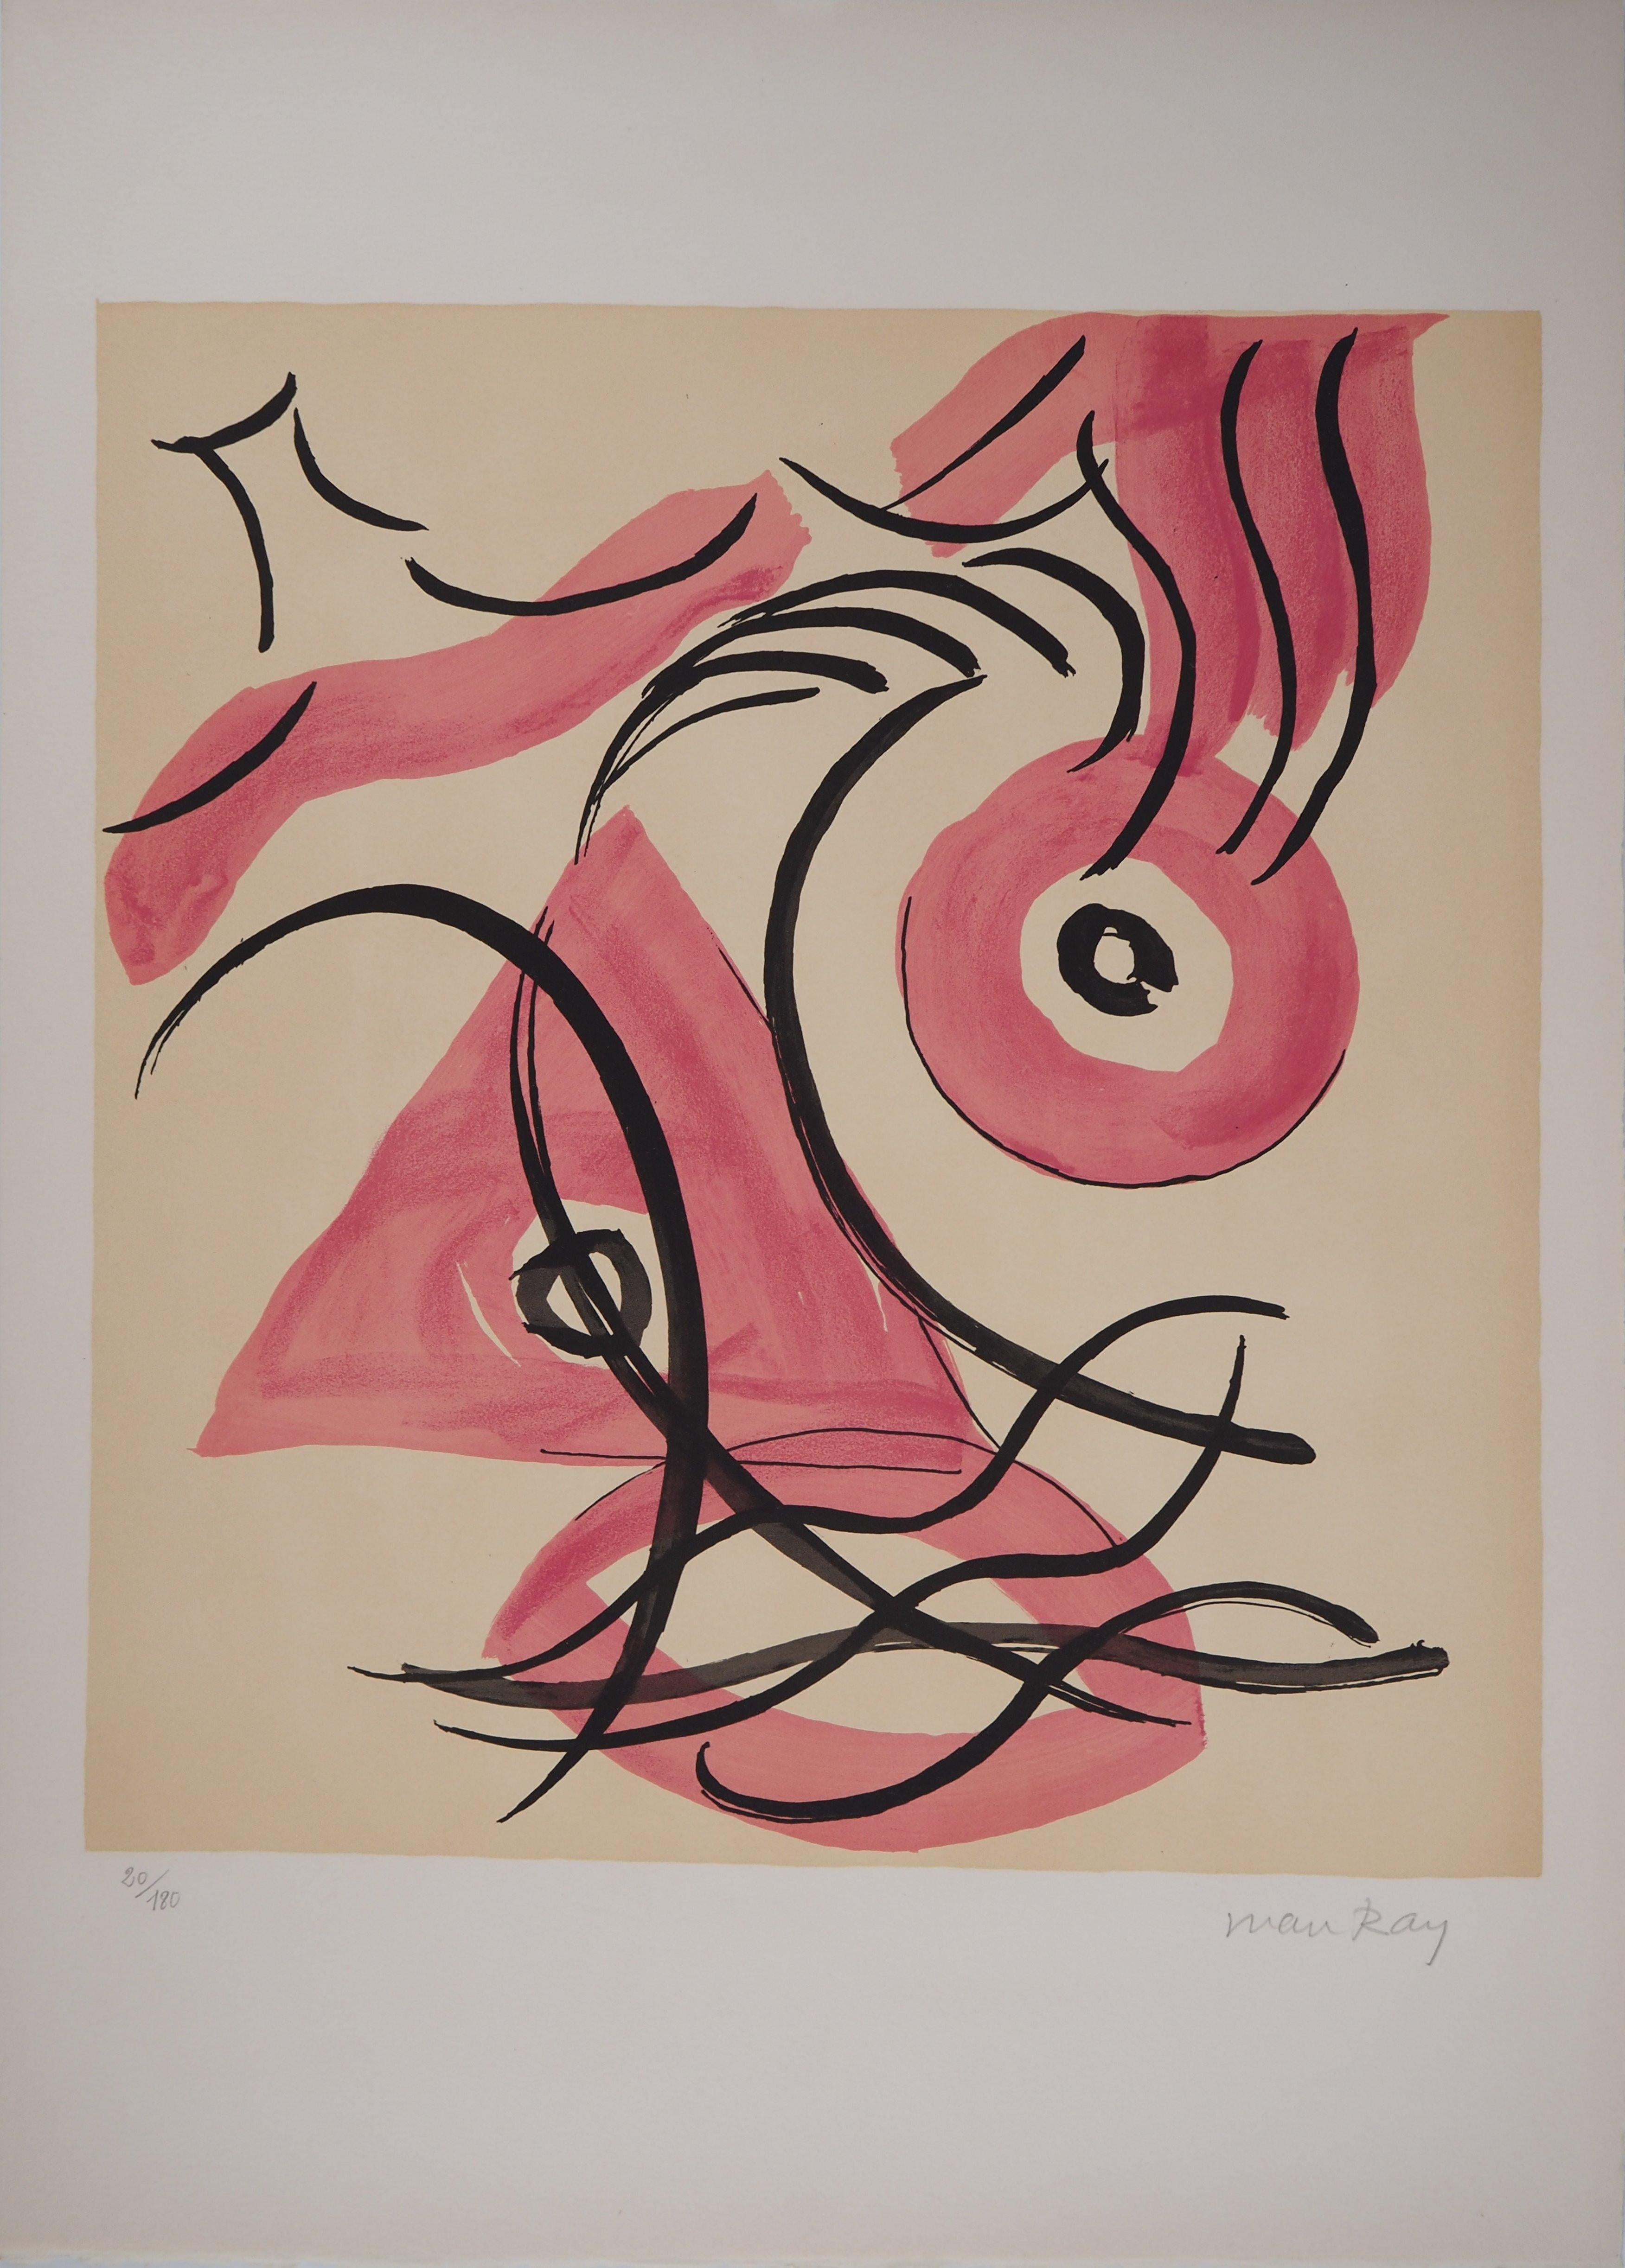 Man Ray Abstract Print - Surrealist Expression - Handsigned Original Lithograph (Anselmino #58)